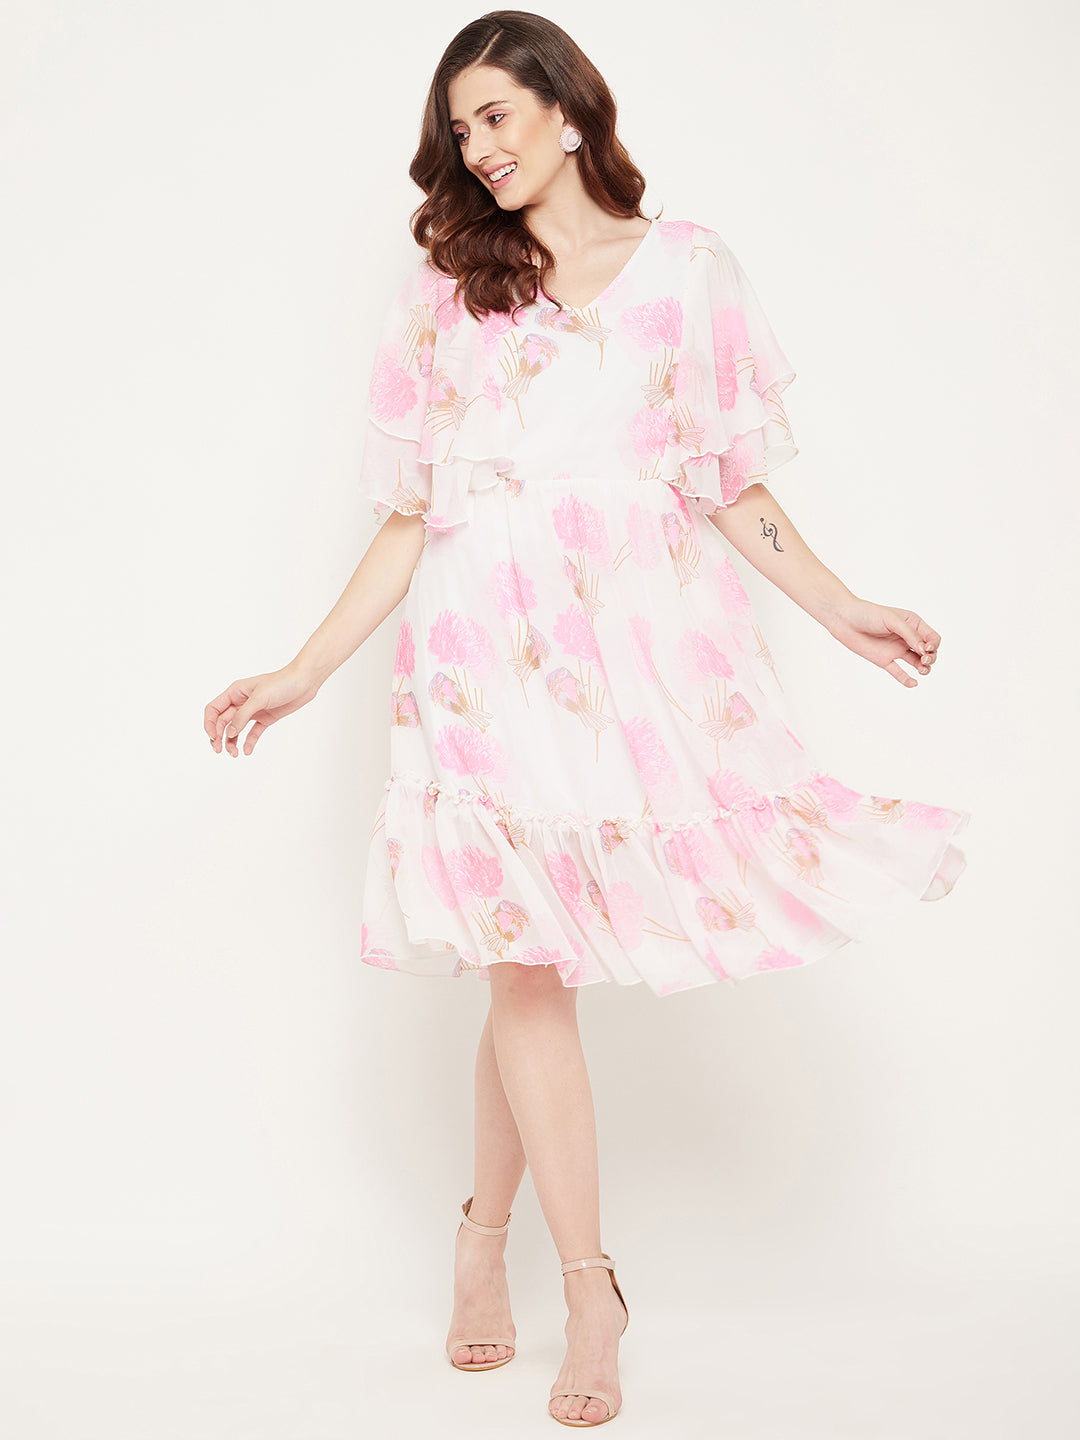 White & Pink Floral Georgette Dress - BITTERLIME